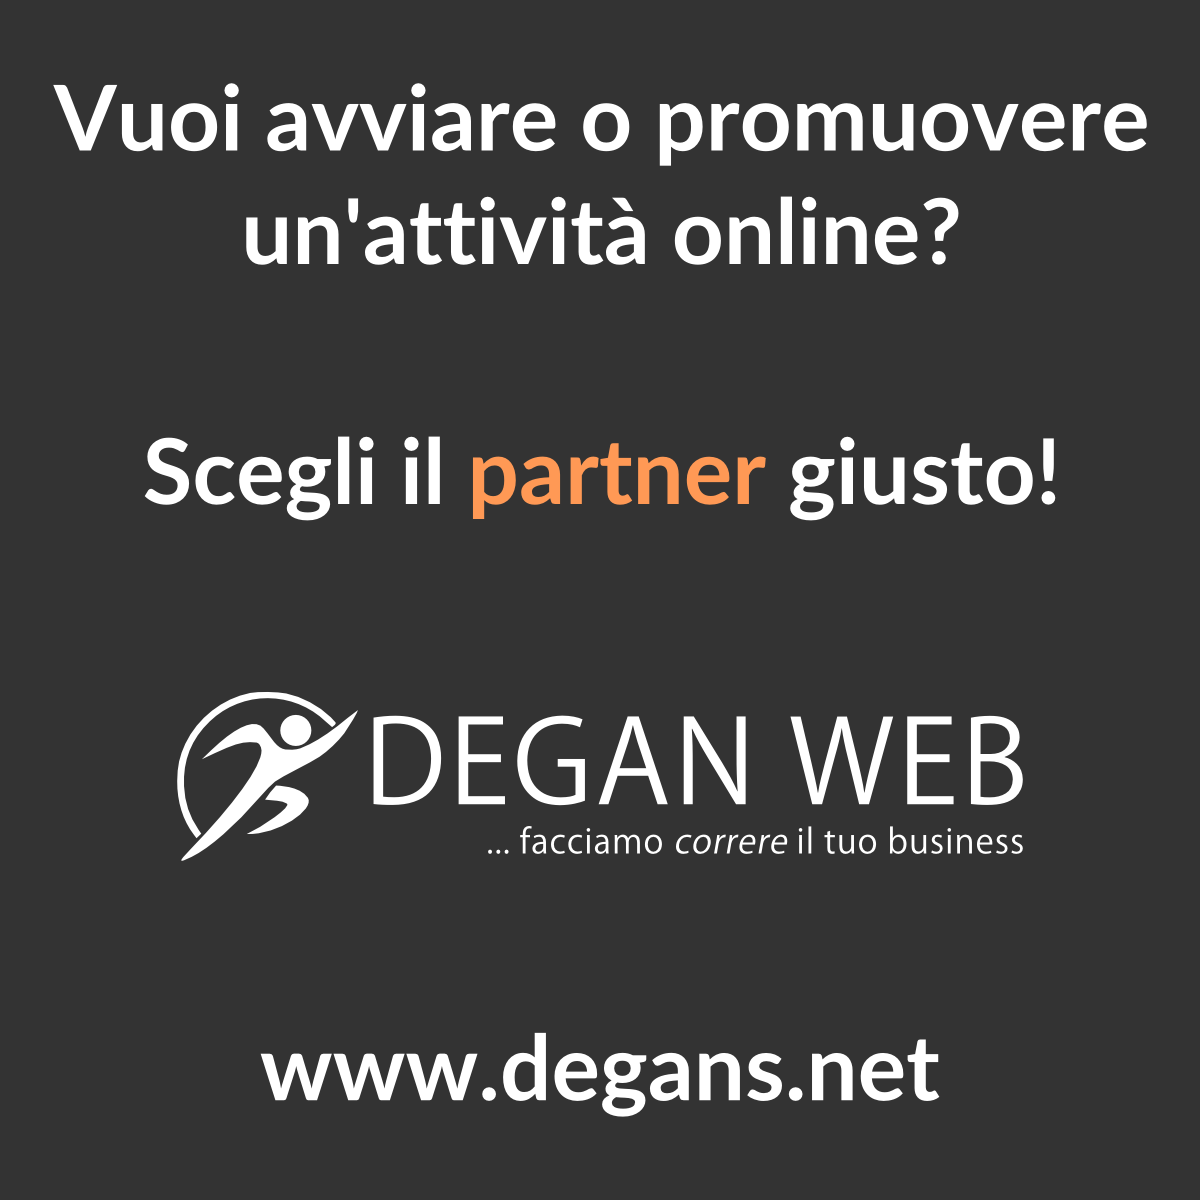 Degan Web partner